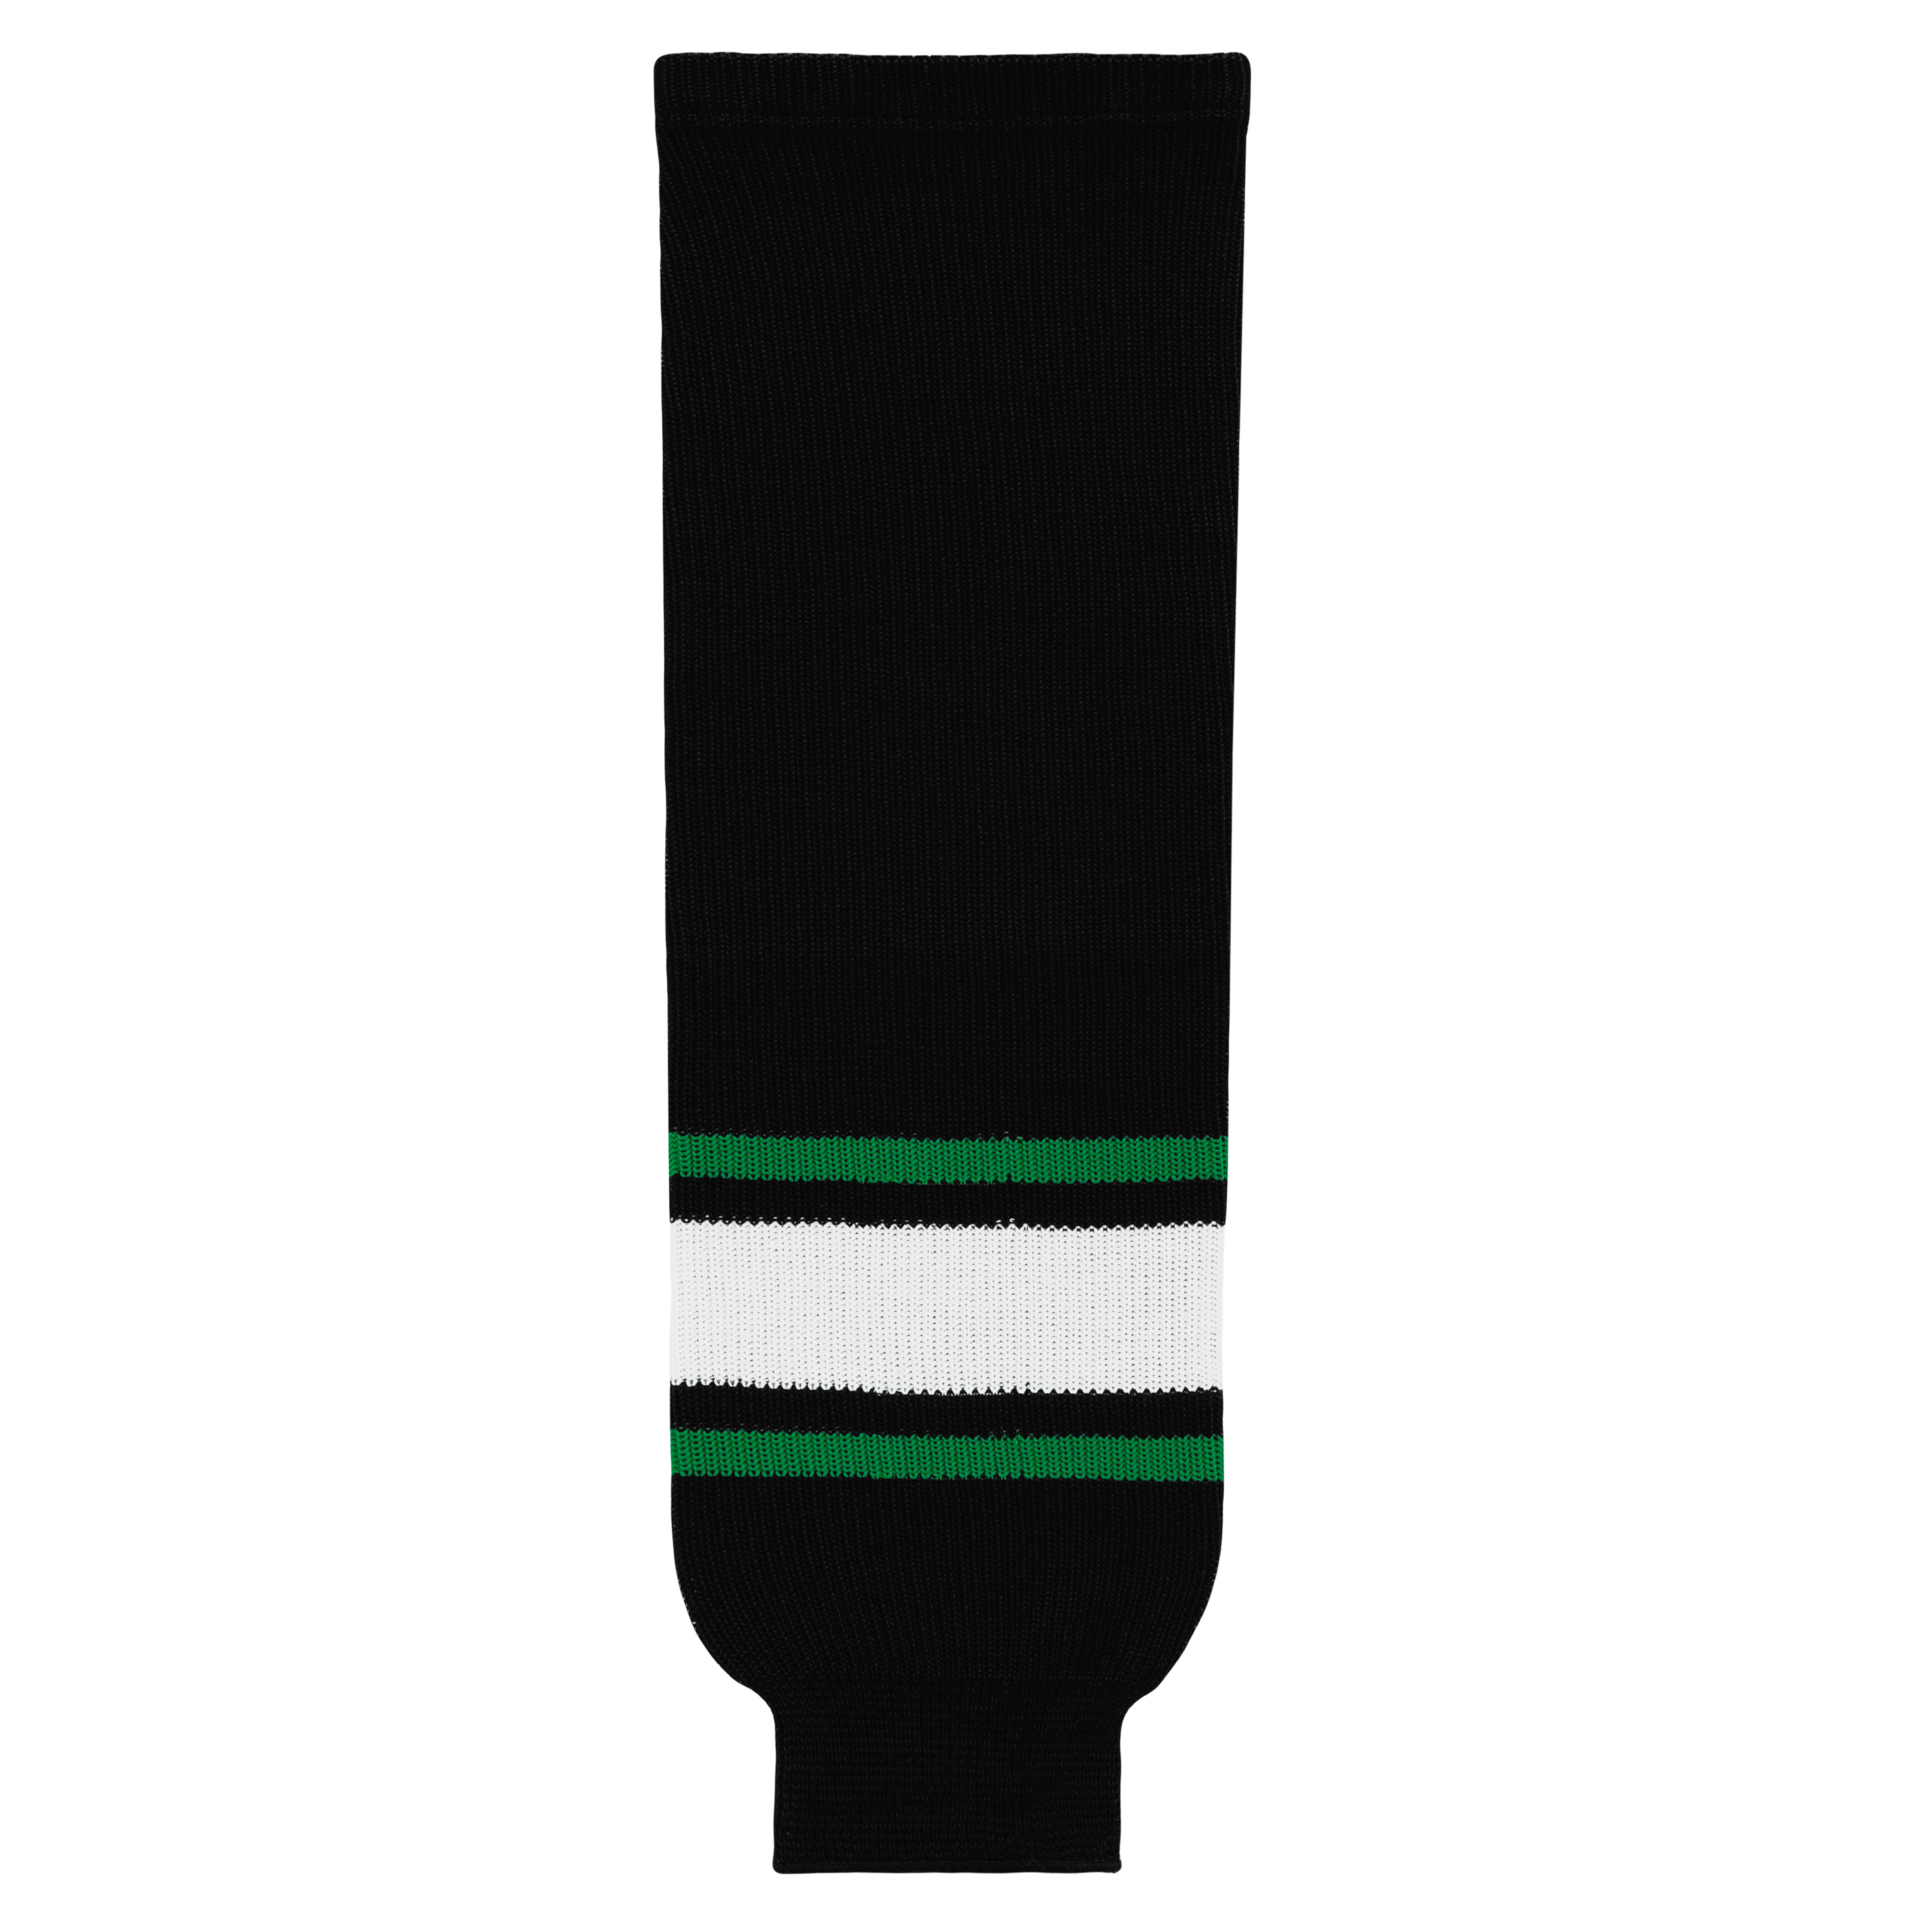 Custom Knitted Hockey Socks Purchase HS640-201 for your Team